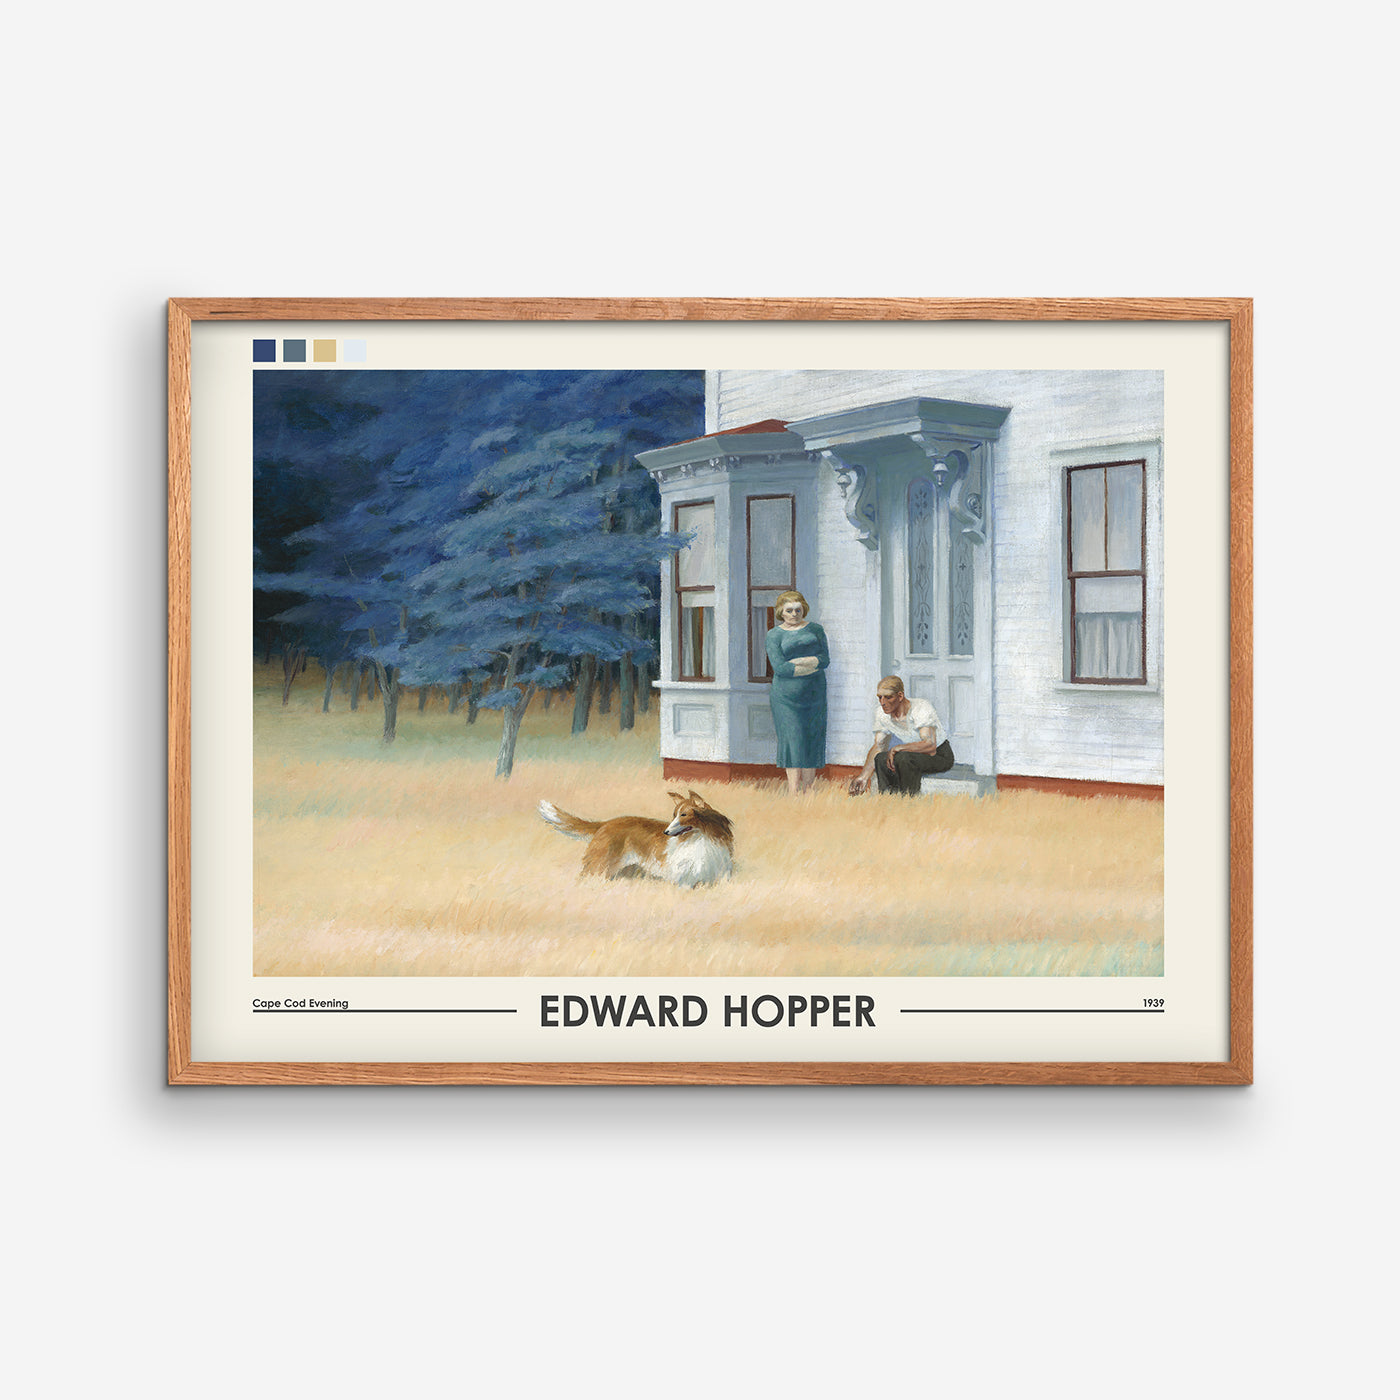 Cape Cod Evening - Edward Hopper